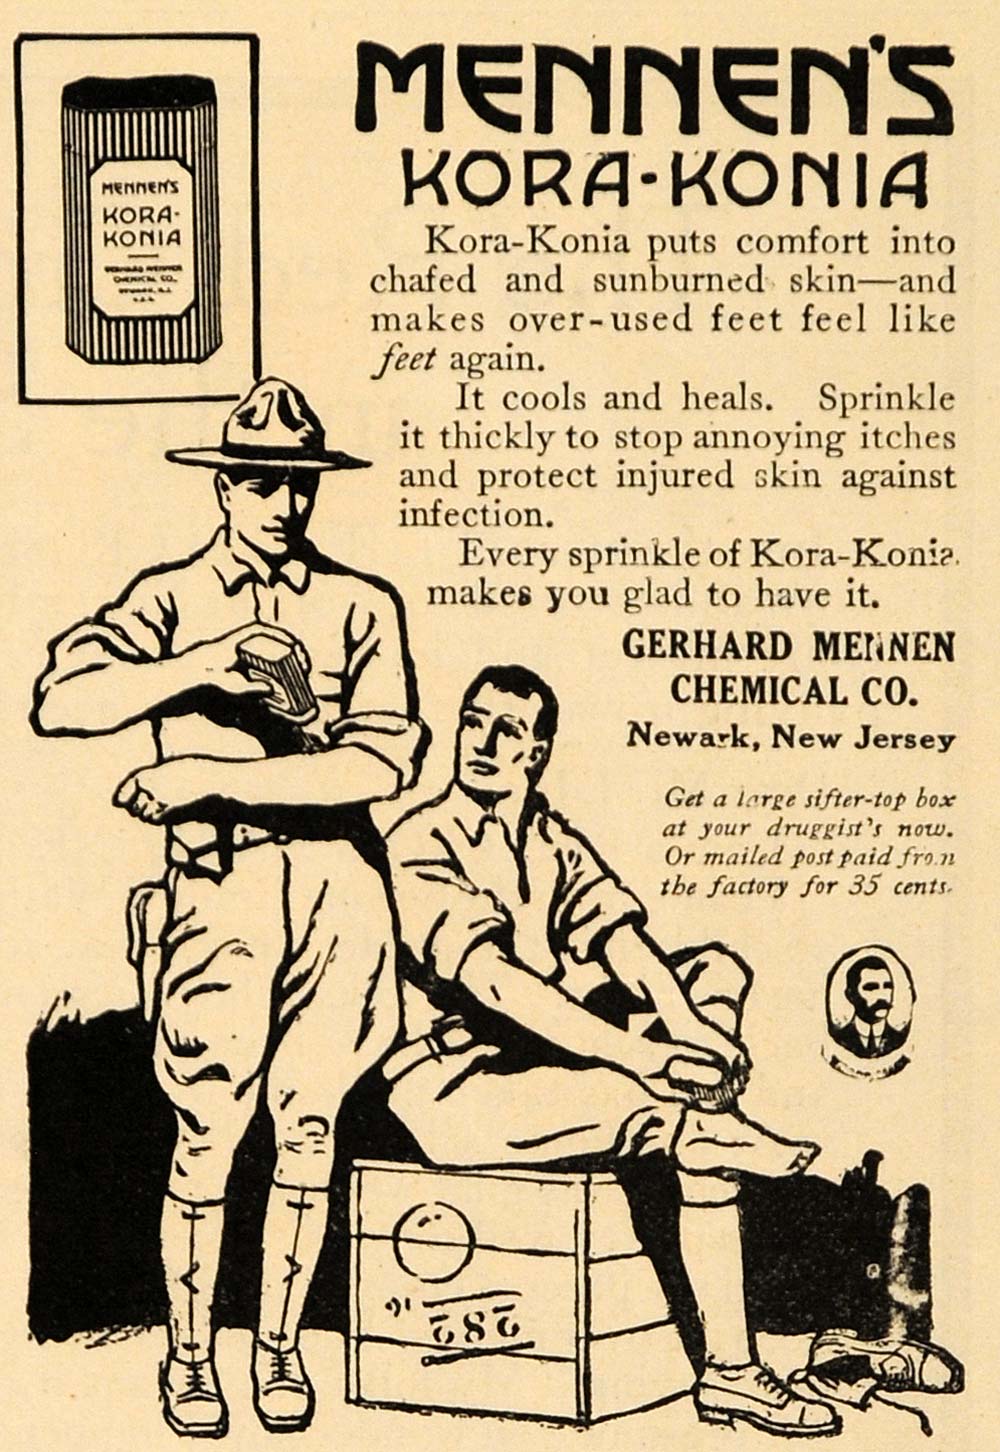 1918 Ad Mennen Kora-Konia Skin Foot Relief WWI Soldiers - ORIGINAL RCM1